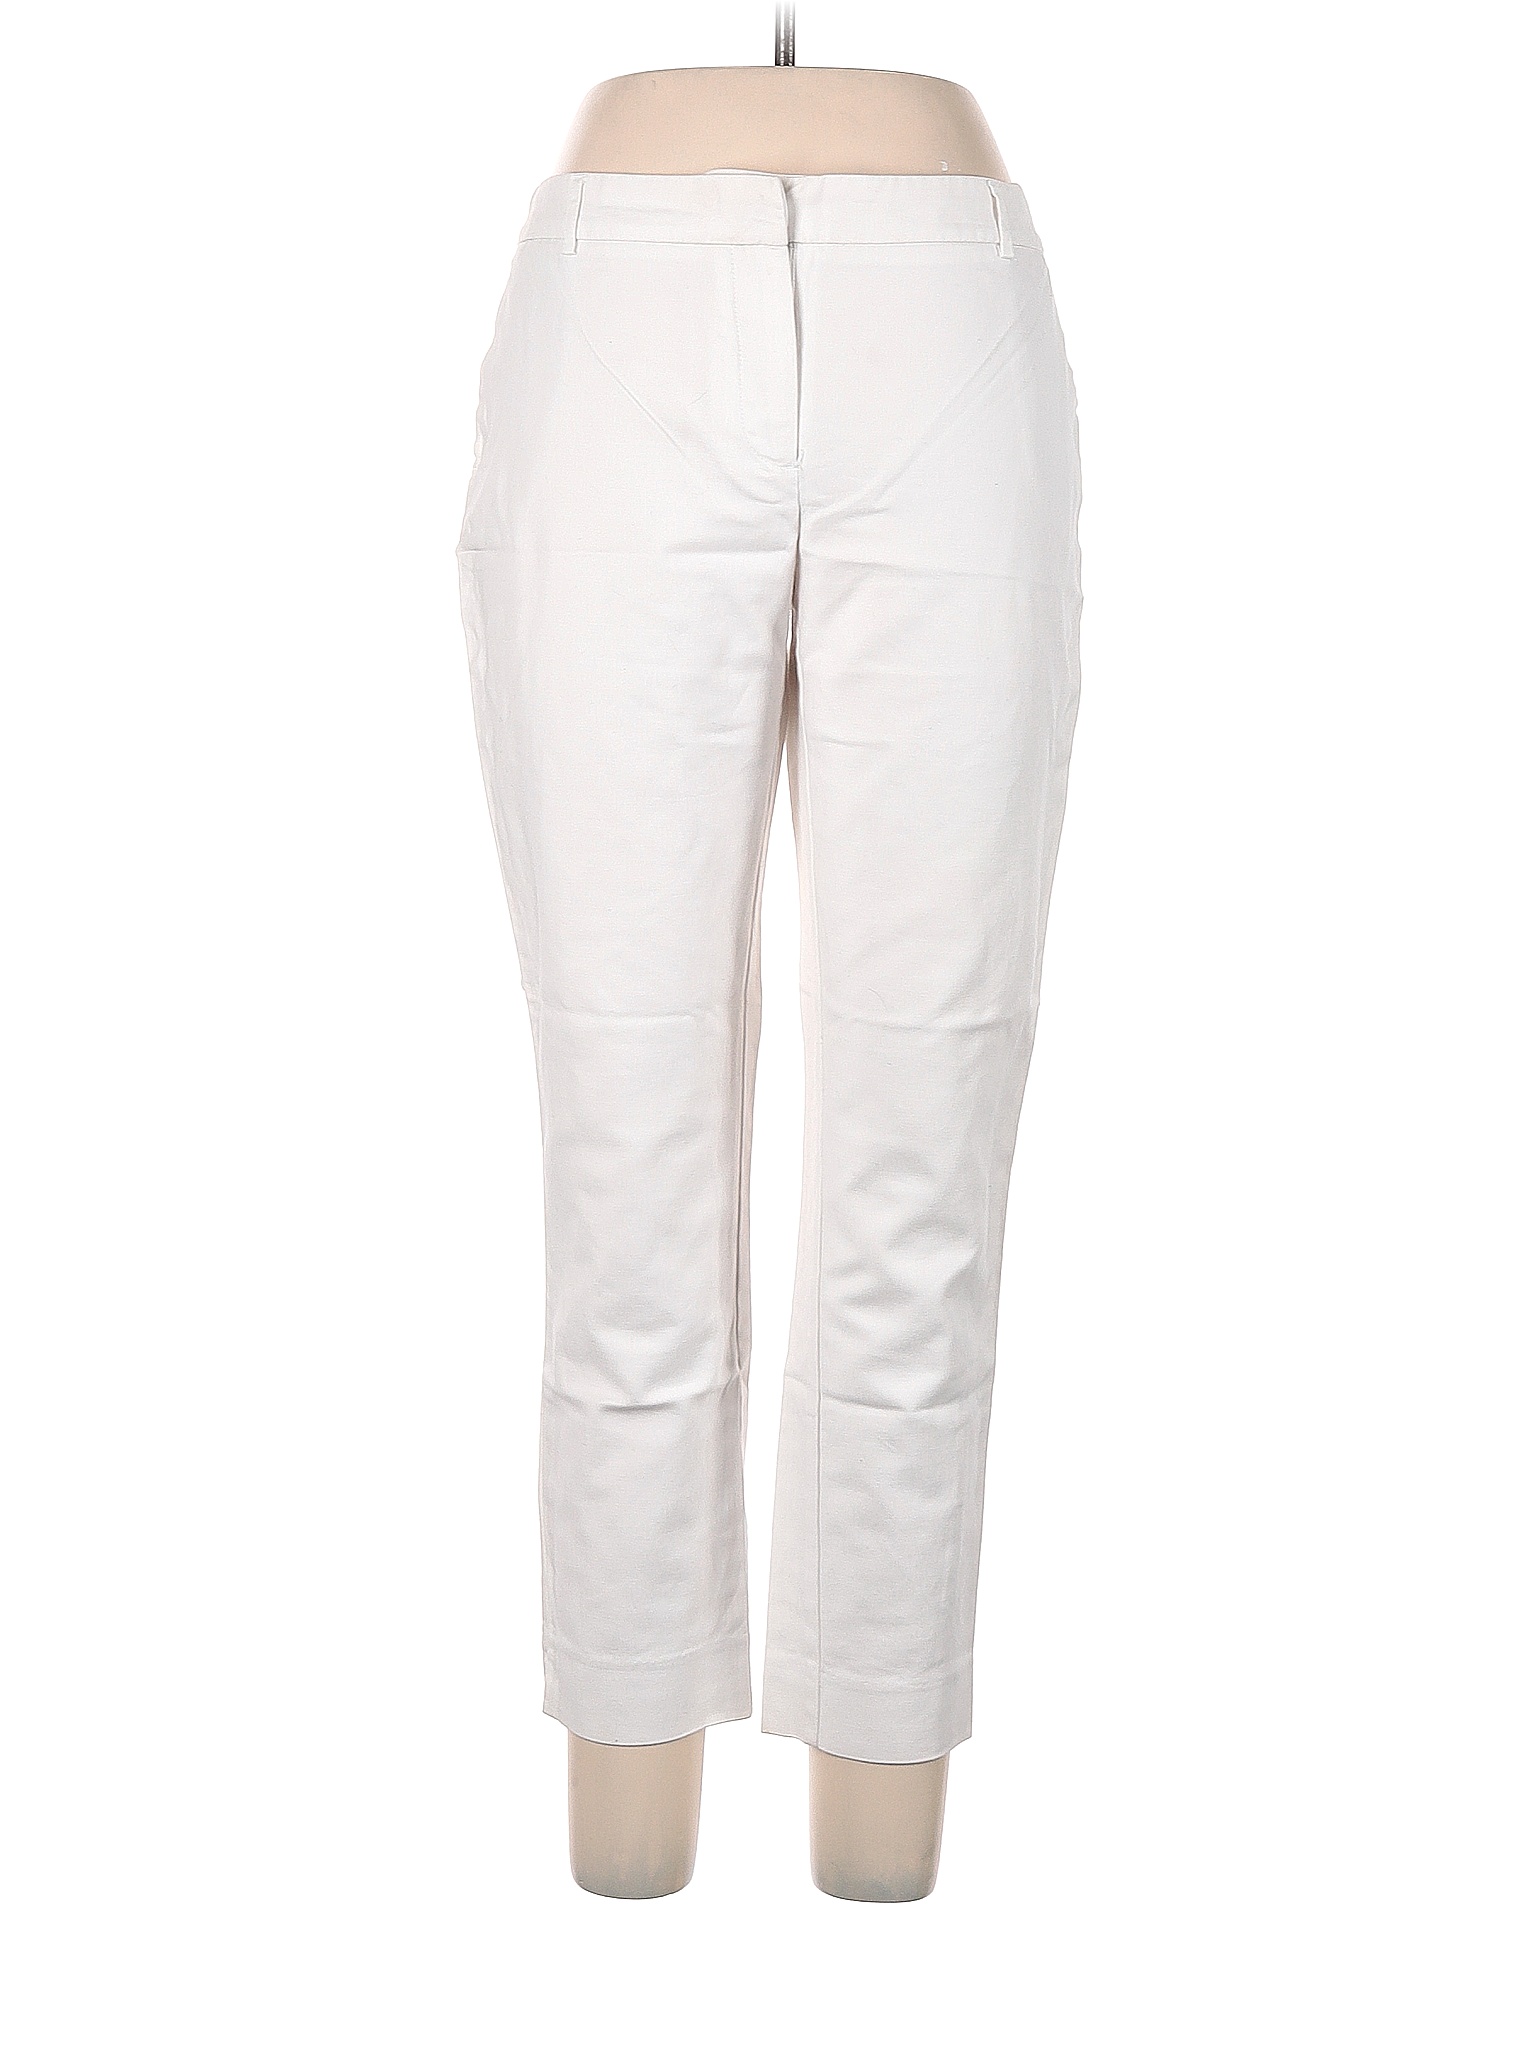 Adrienne Vittadini Solid Colored White Khakis Size 12 - 87% off | ThredUp